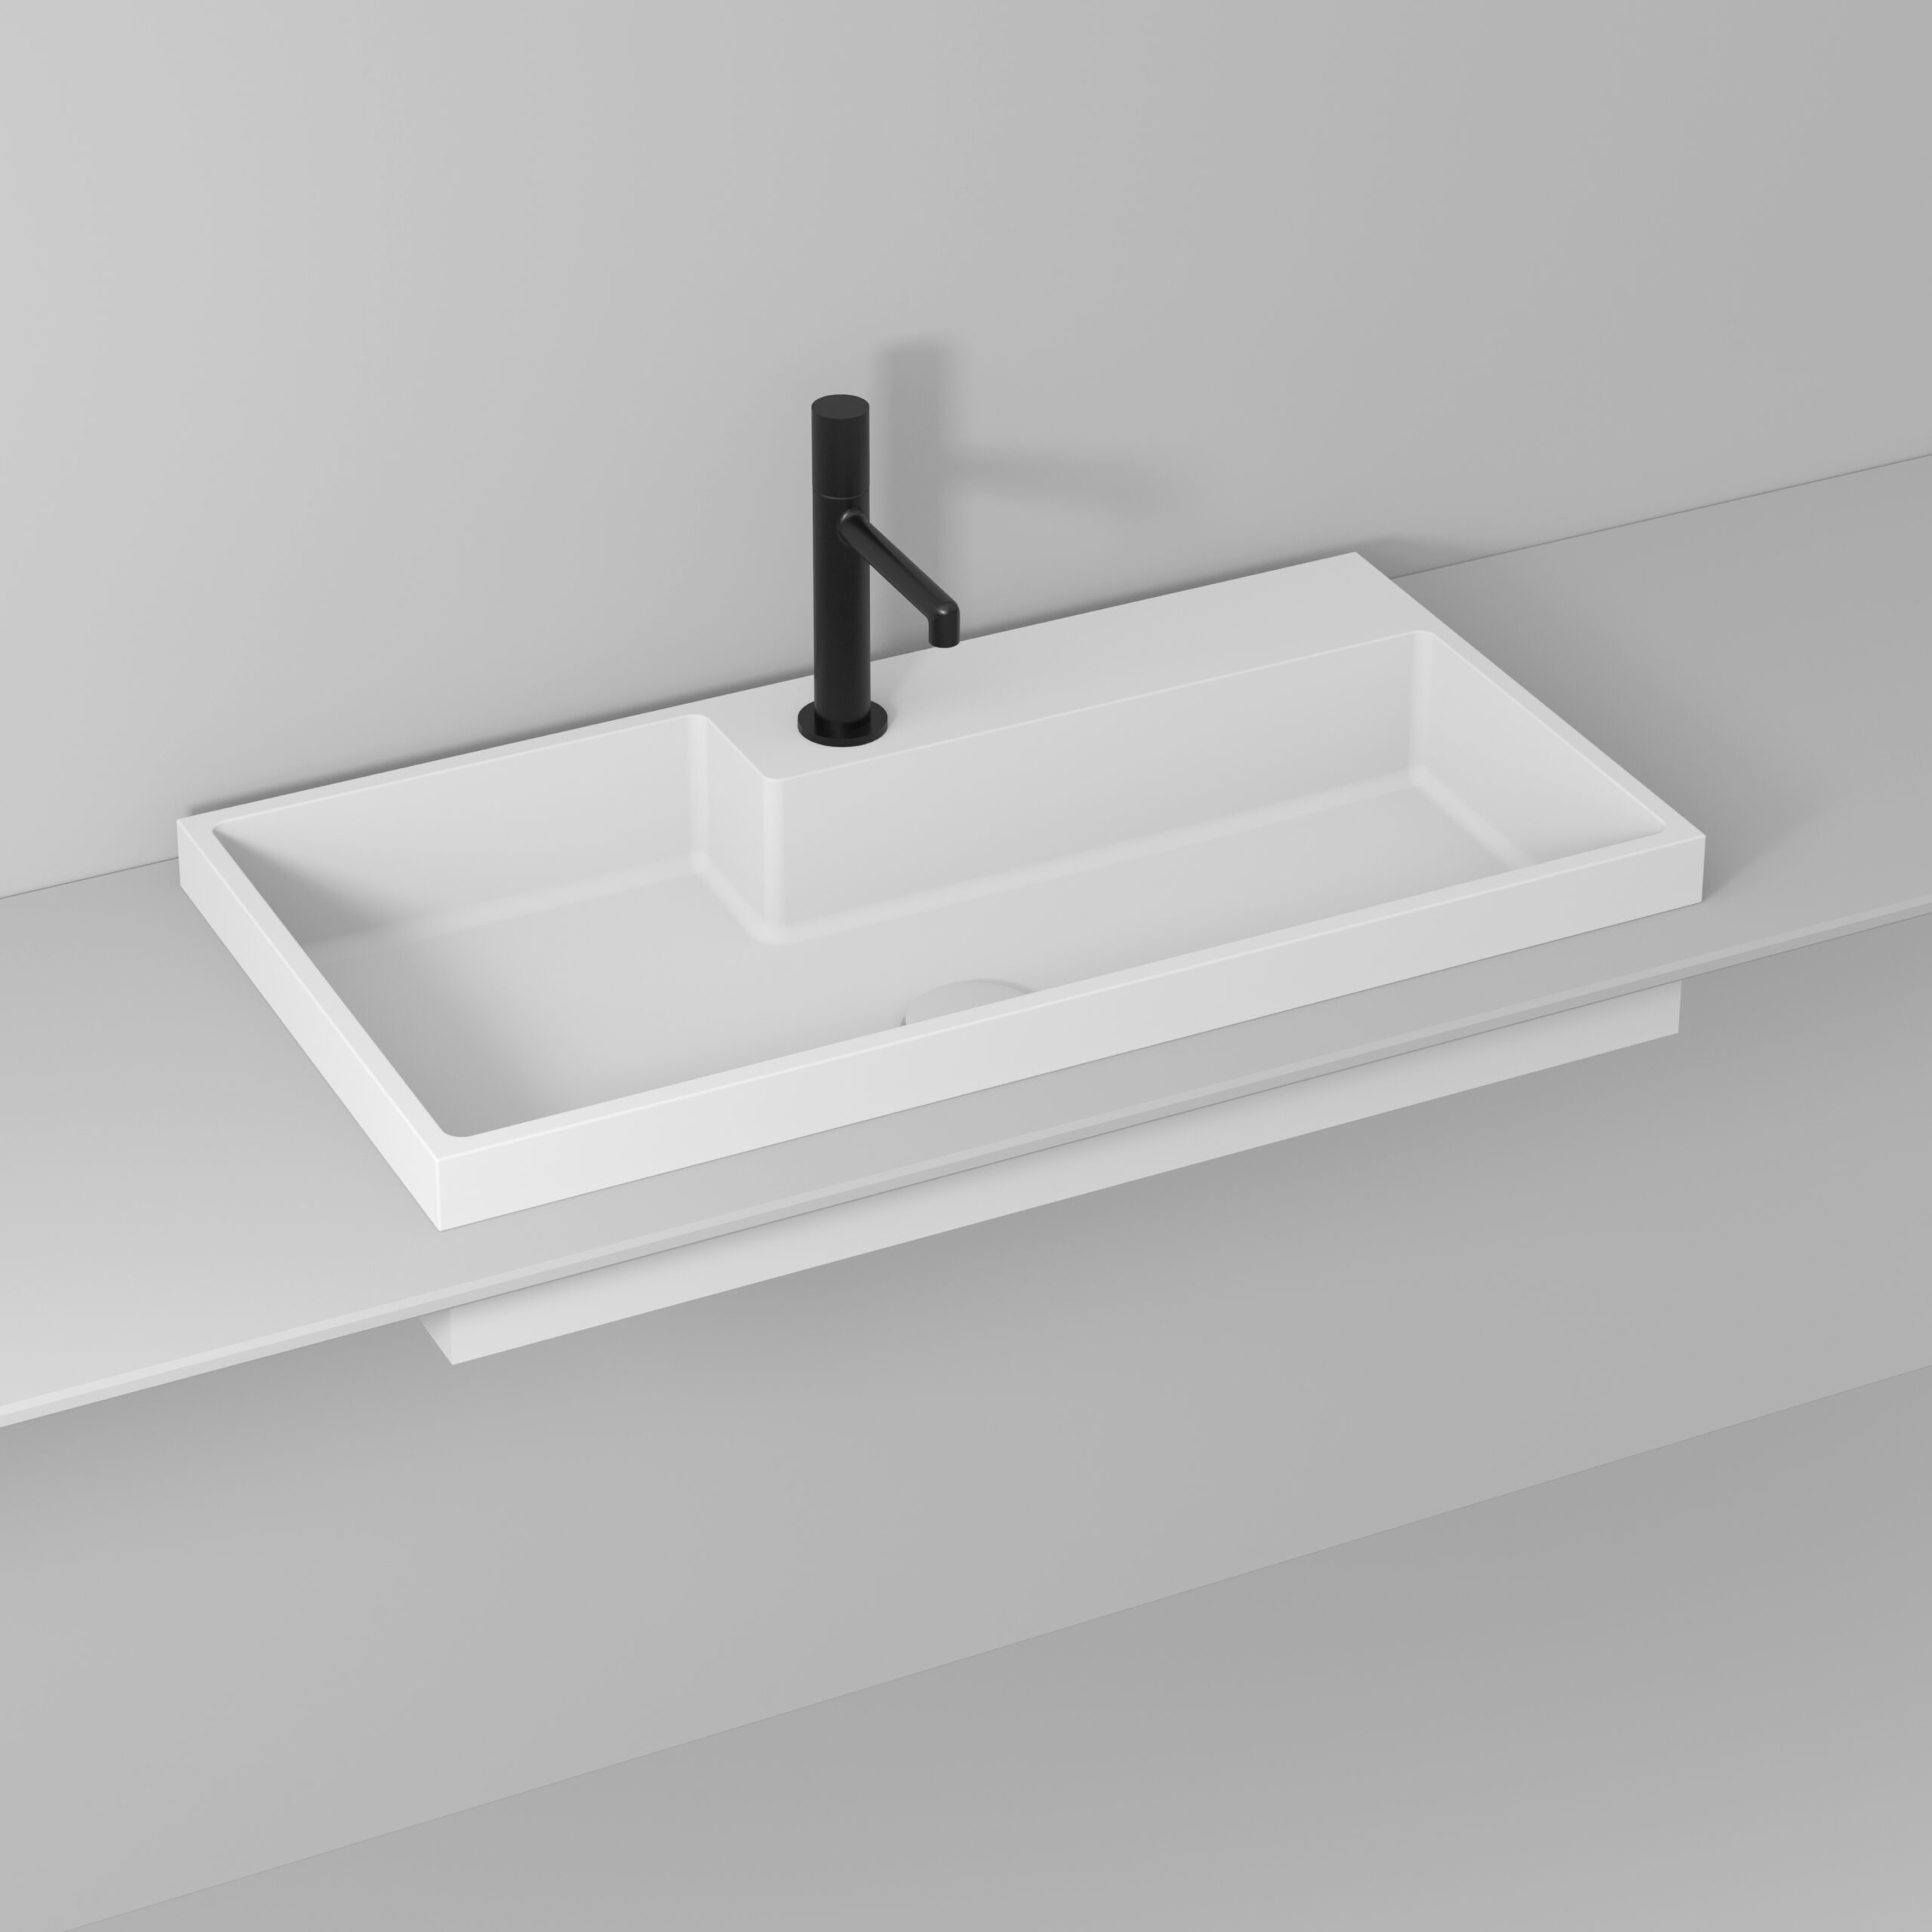 Cubik built-in washbasin